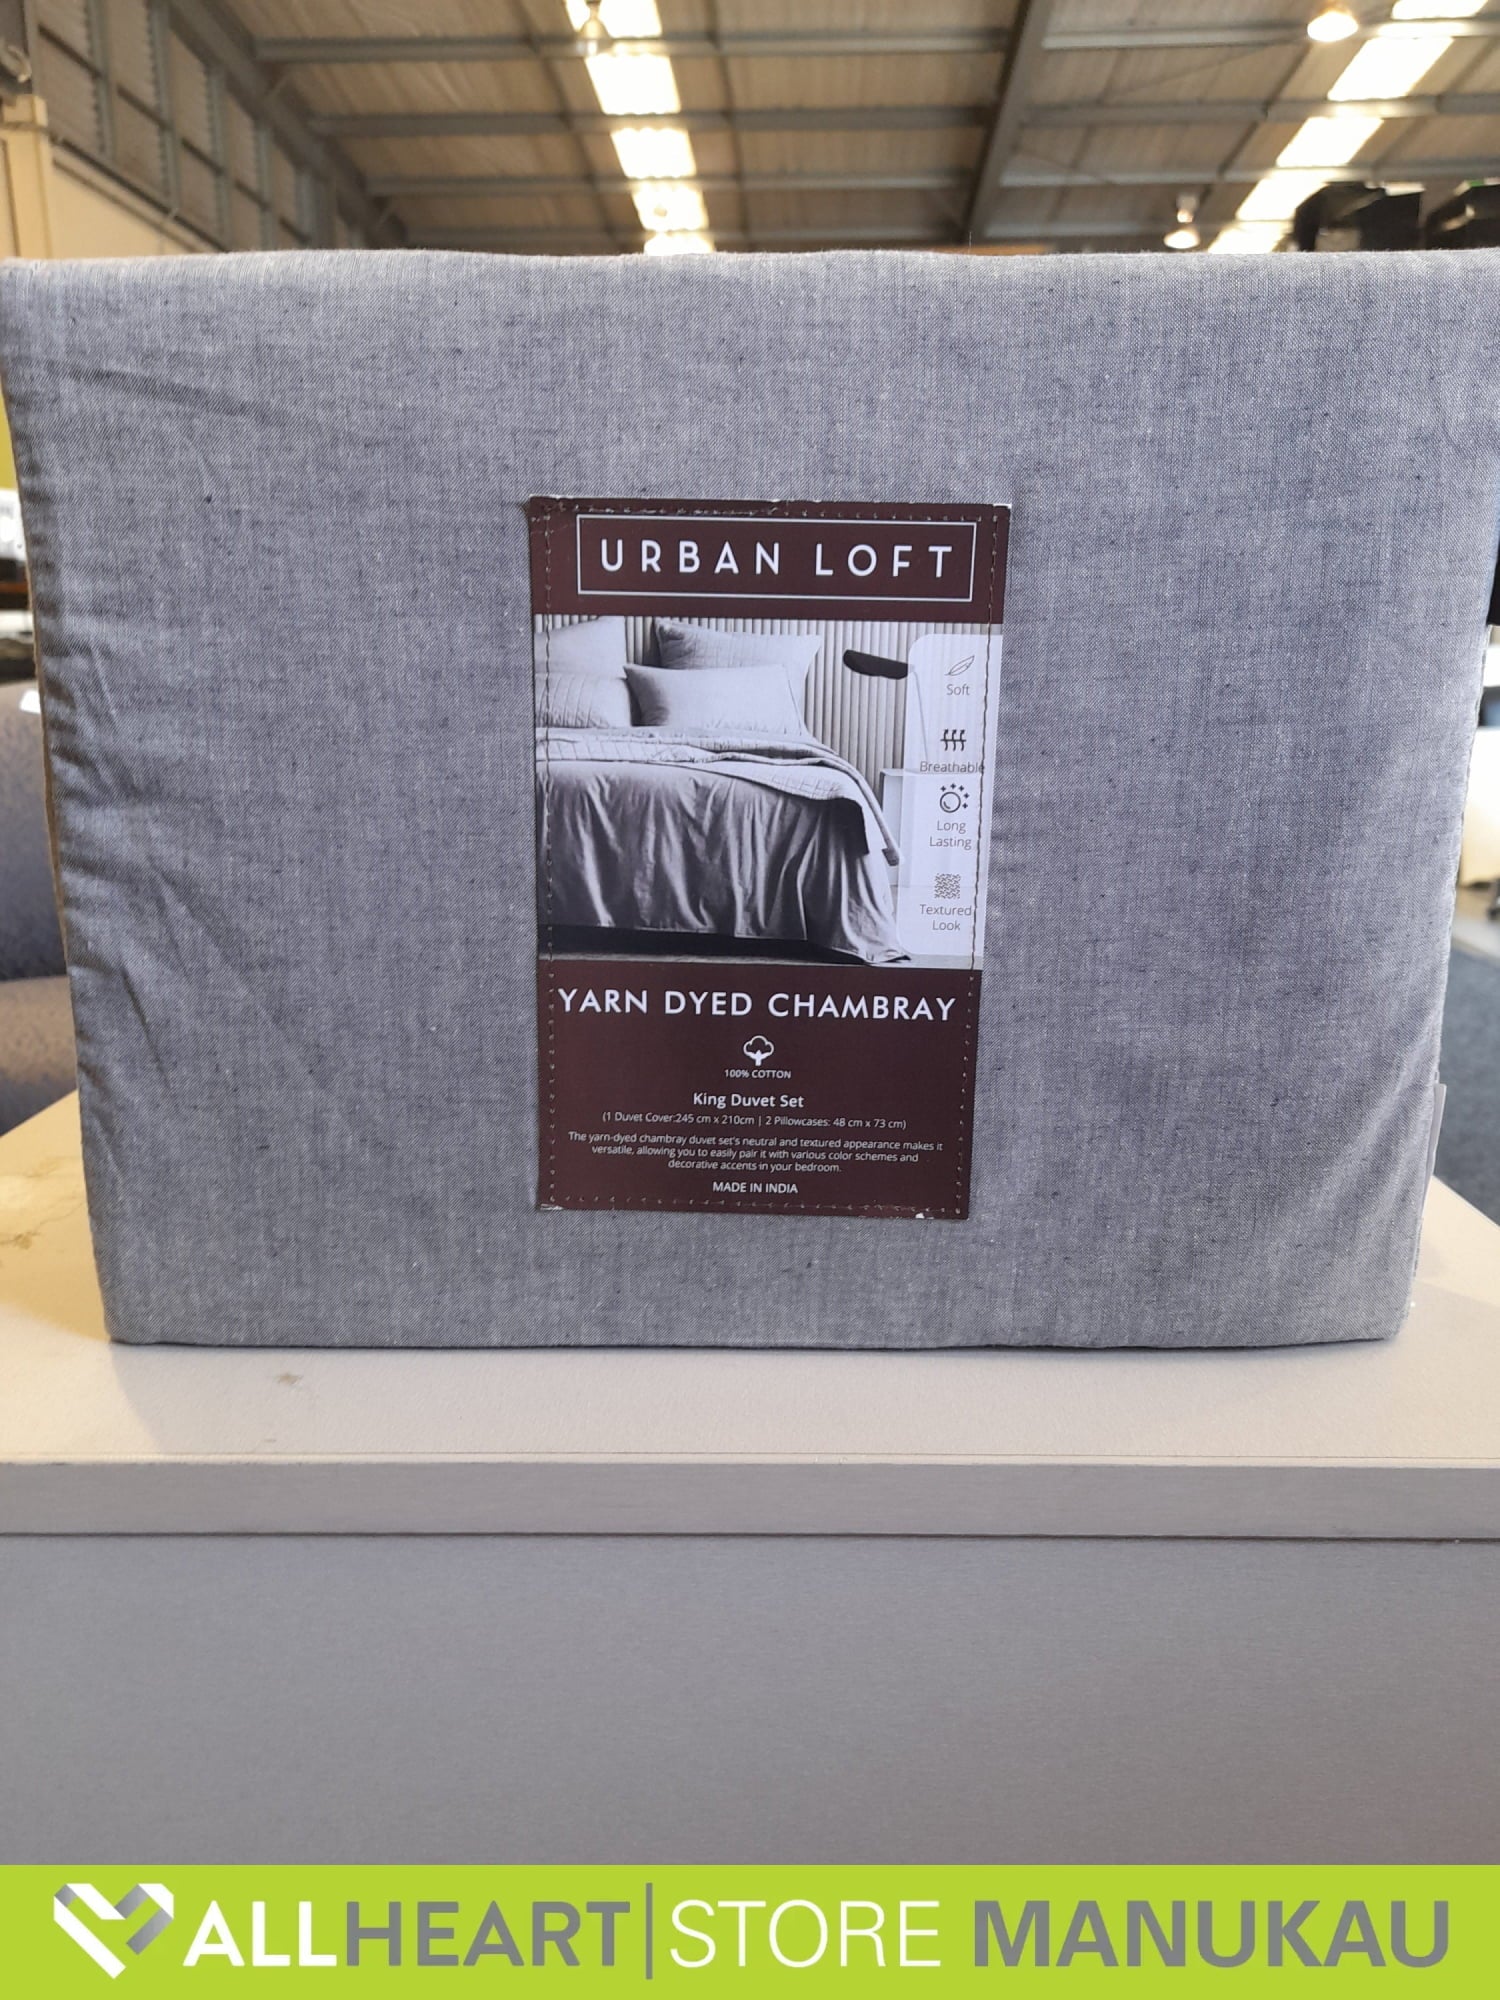 Urban Loft - Duvet Set King Light Grey